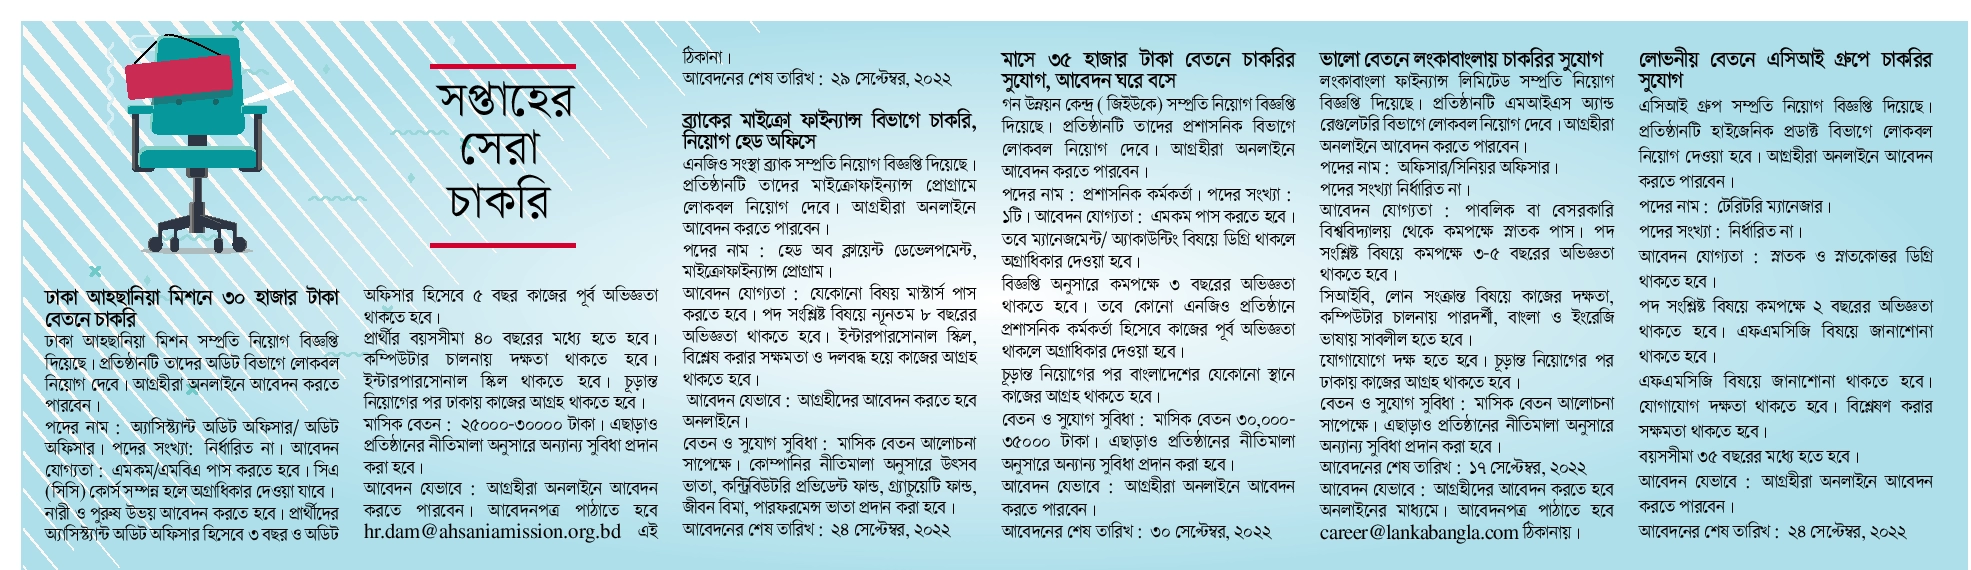 Ittefaq Weekly Job Circular - ittefaq.com.bd